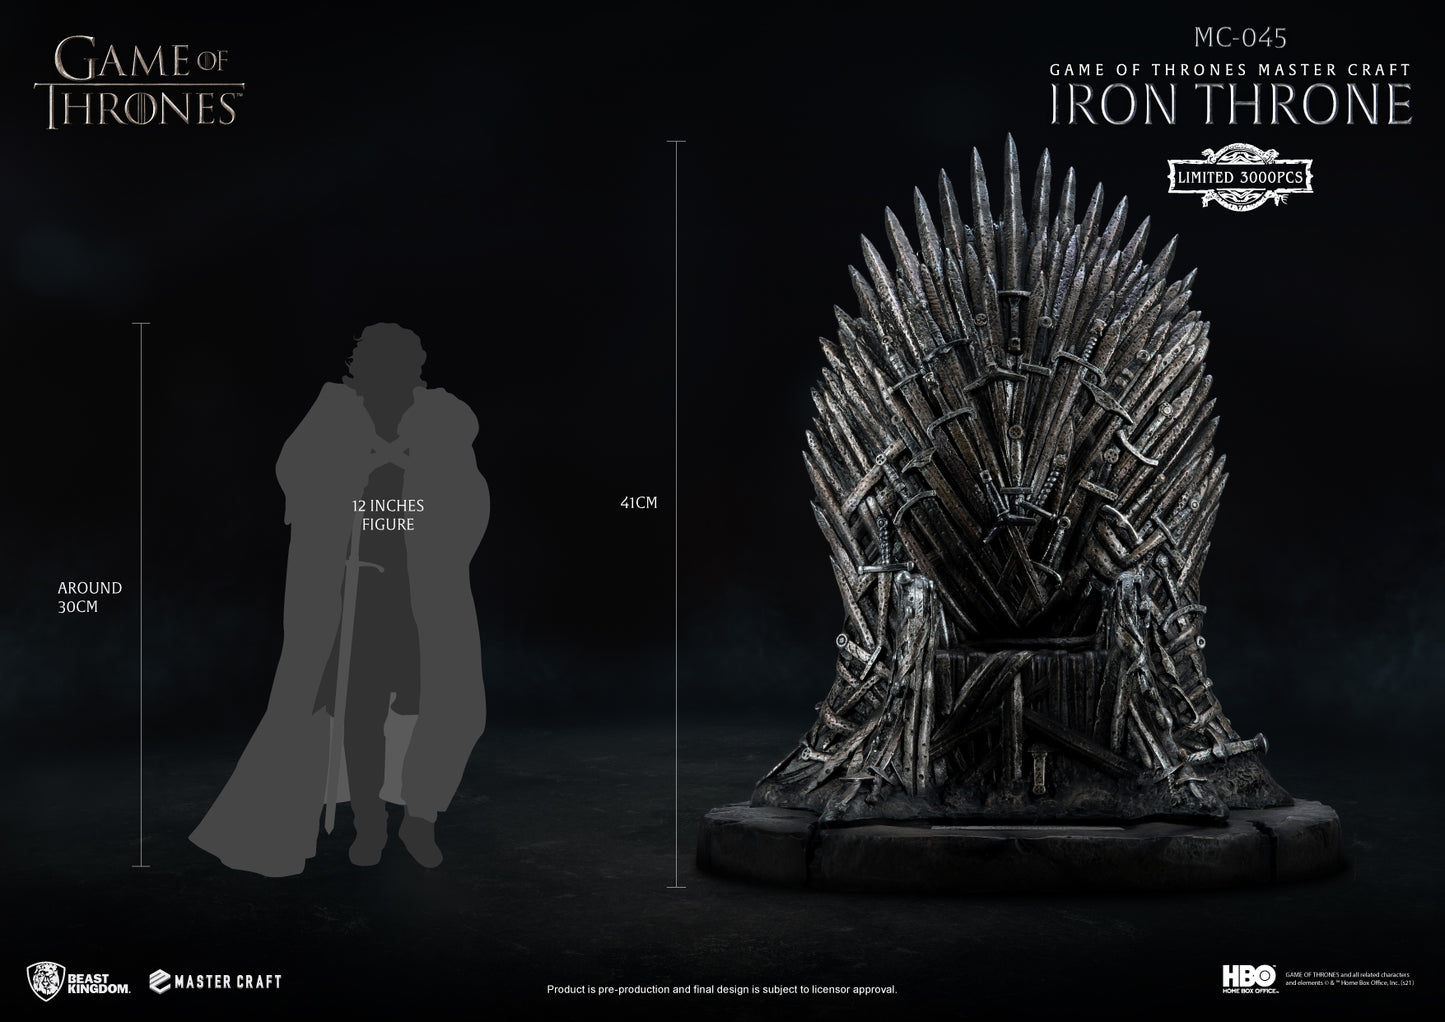 Game of Thrones Iron Throne Master Craft Statue